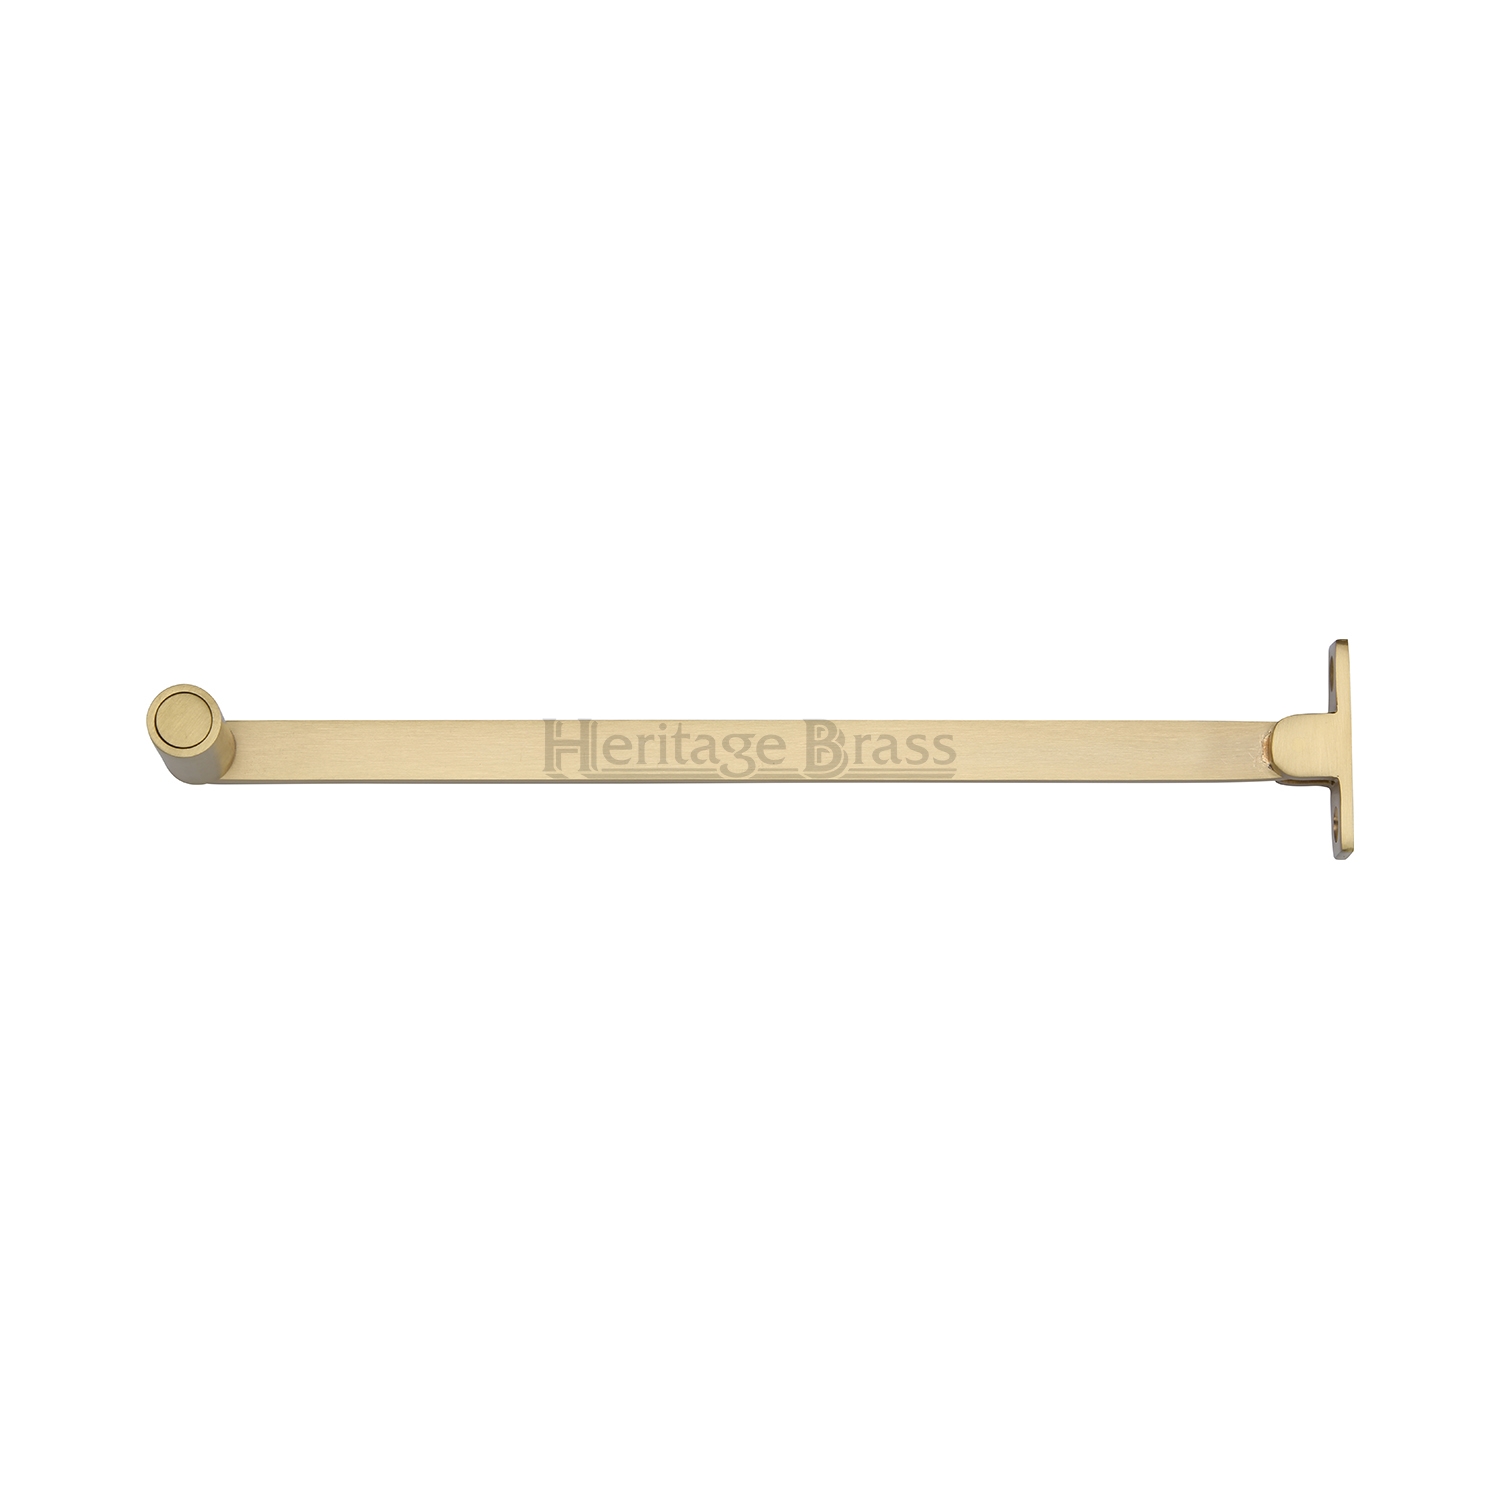 Heritage Brass Casement Stay Roller Arm Design 254mm